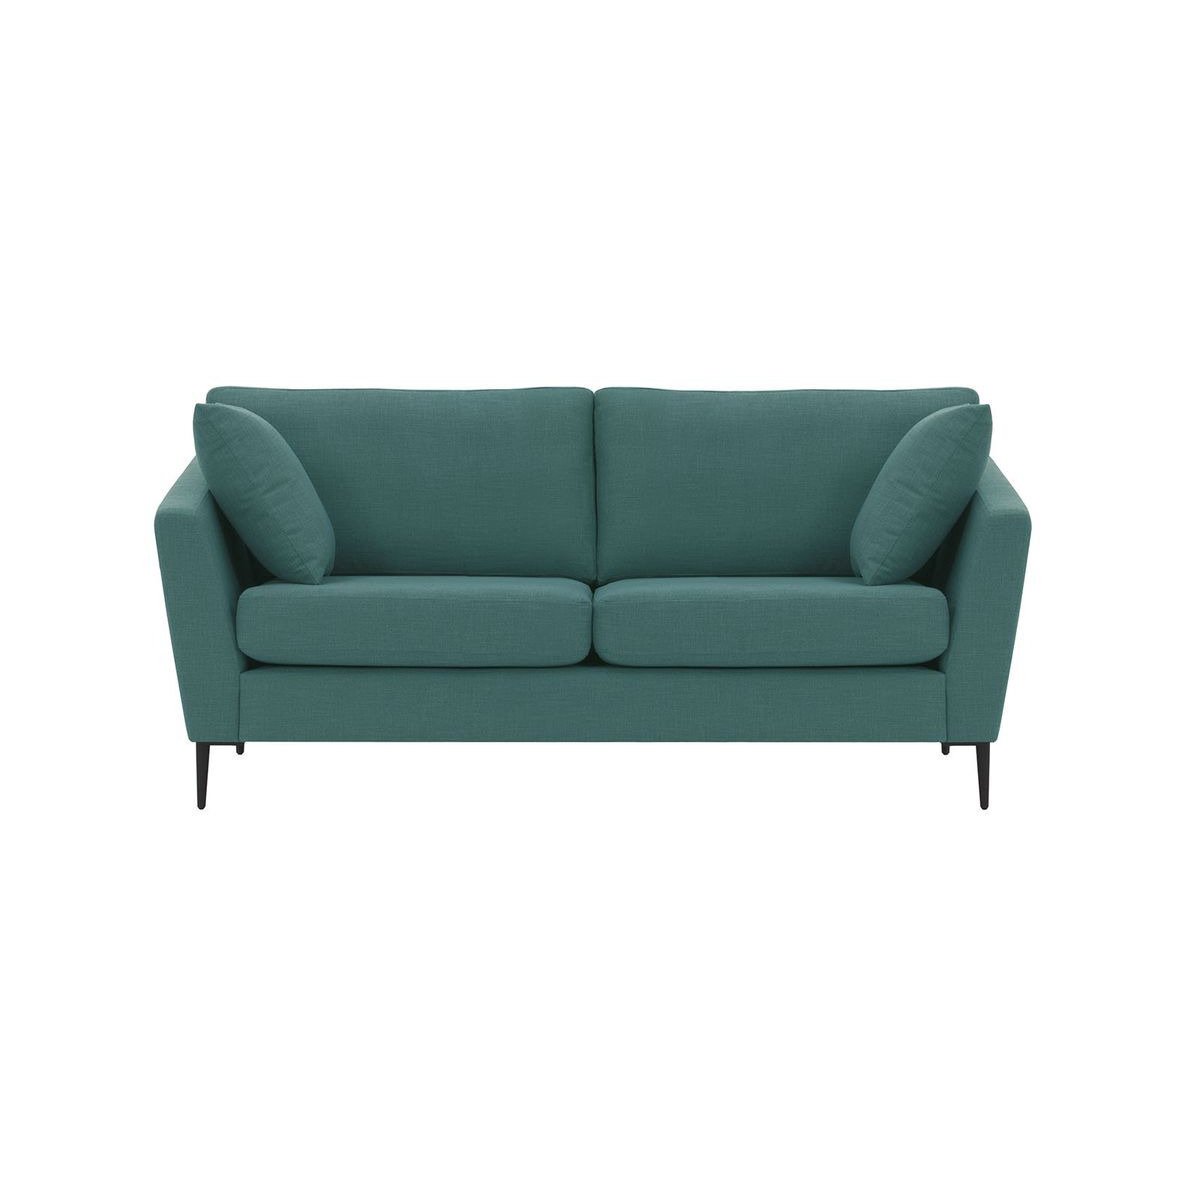 Imani 2,5 Seater Sofa, turquoise - image 1